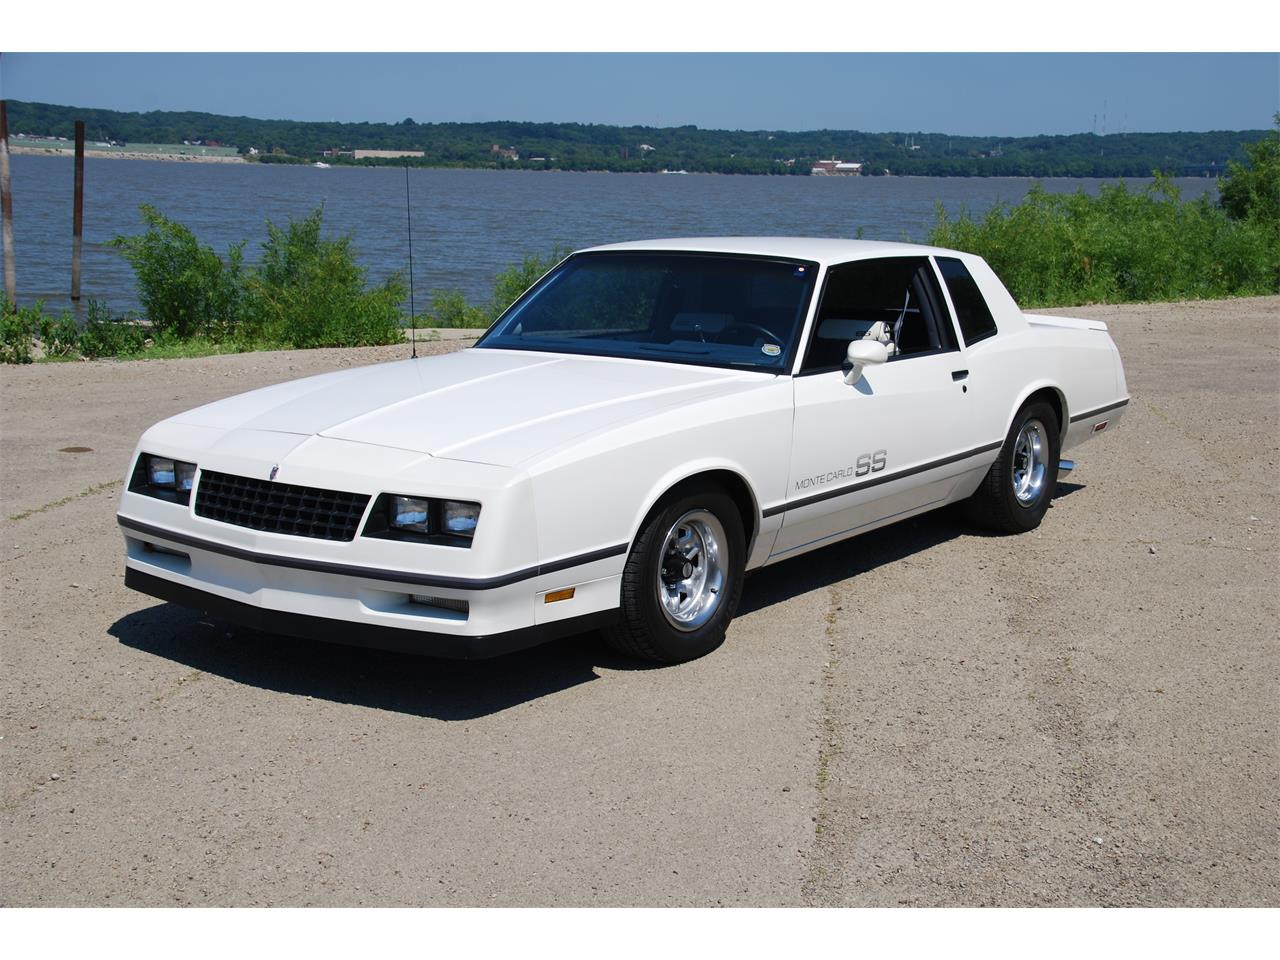 1983 Chevrolet Monte Carlo Ss For Sale Classiccars Com